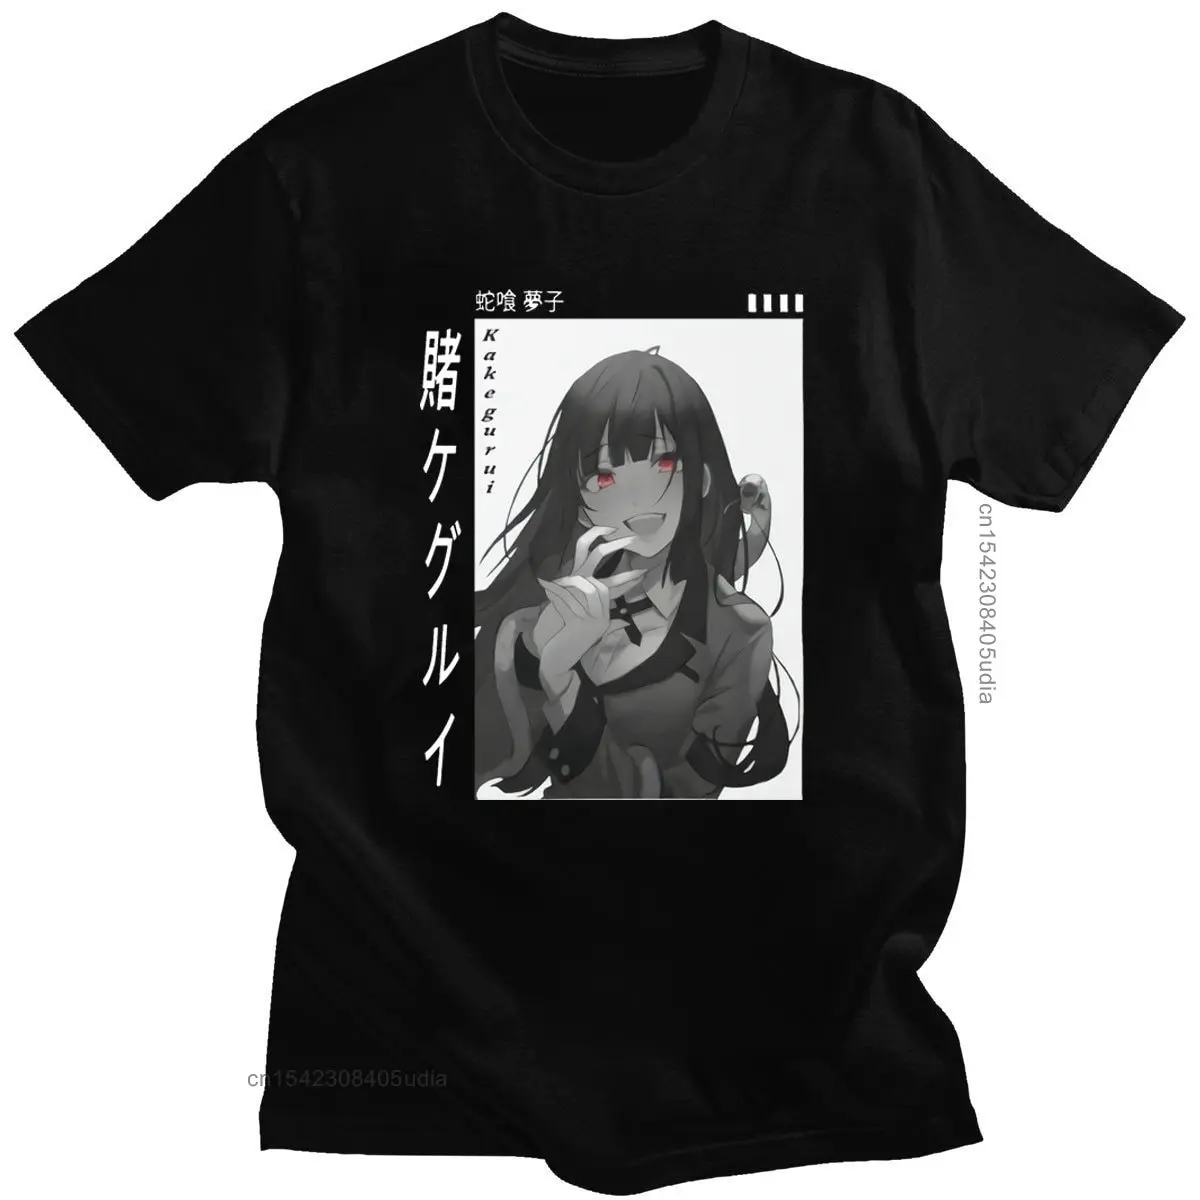 Japan Anime Jabami Yumeko Tshirts Kakegurui Cute Cartoon Print Tops Cosplay The New Casual Harajuku Man Cotton T-Shirt